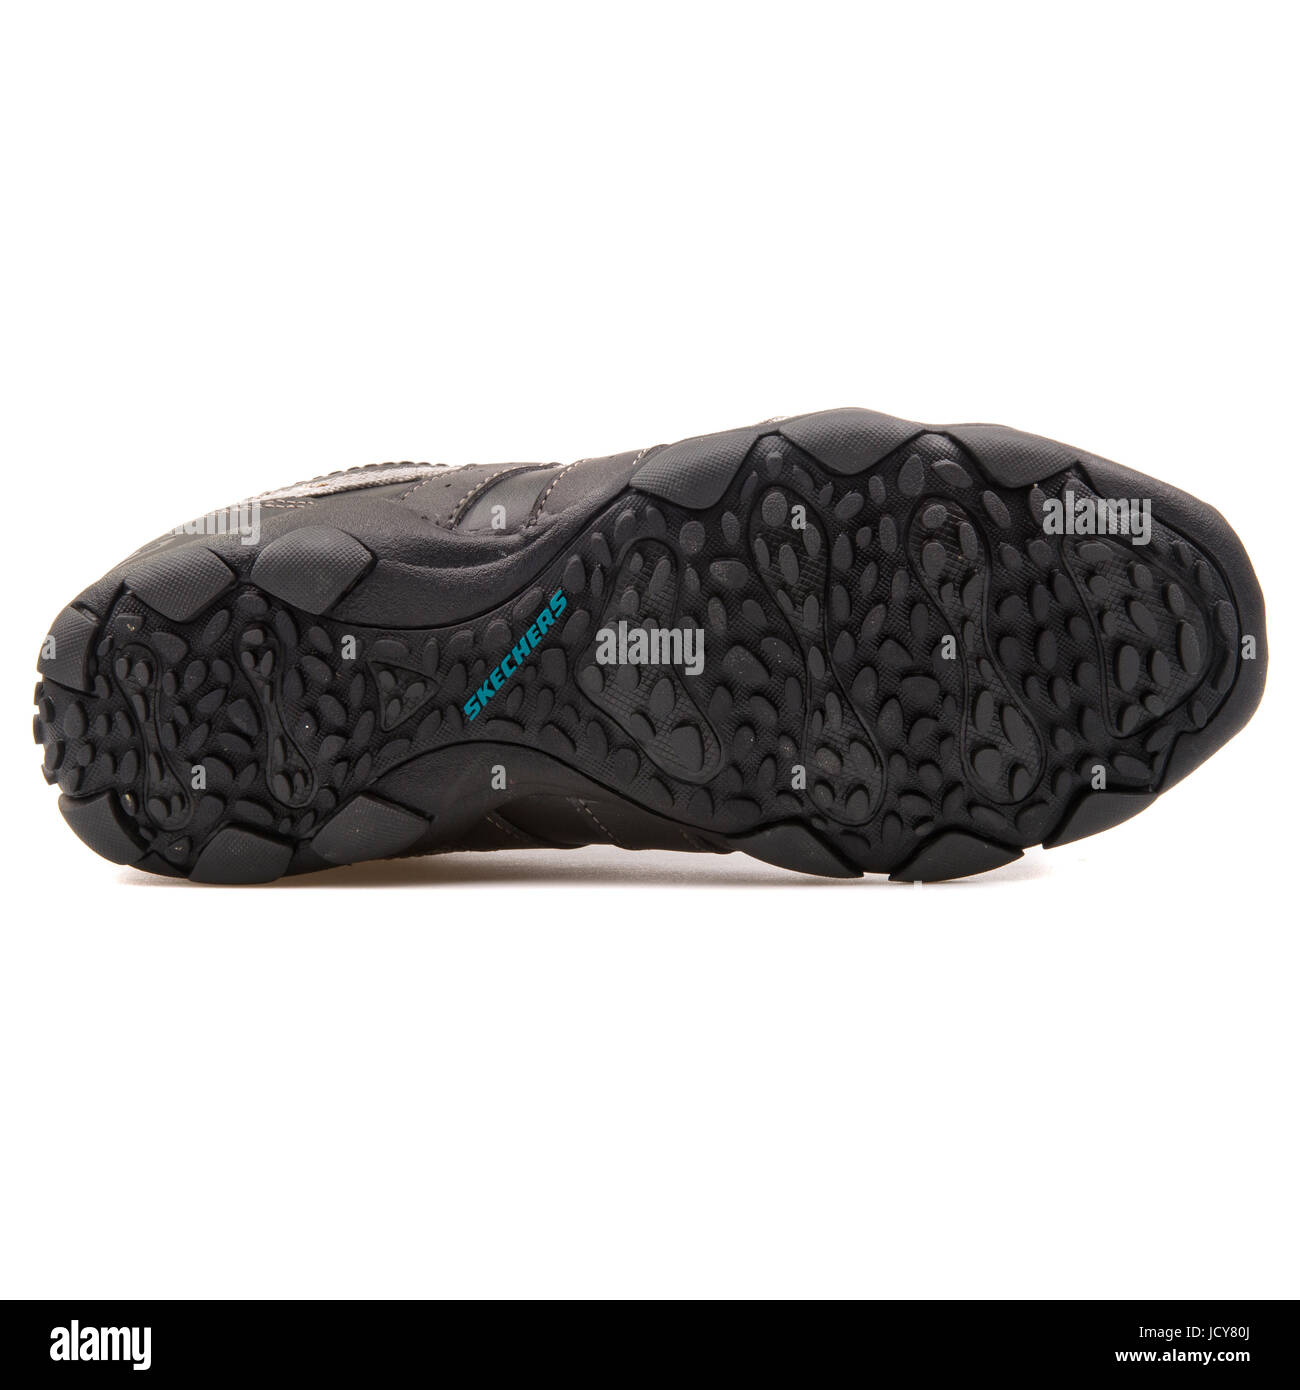 Skechers Diameter Blake Black Men's Leather Shoes - 63385-BLK Stock Photo -  Alamy